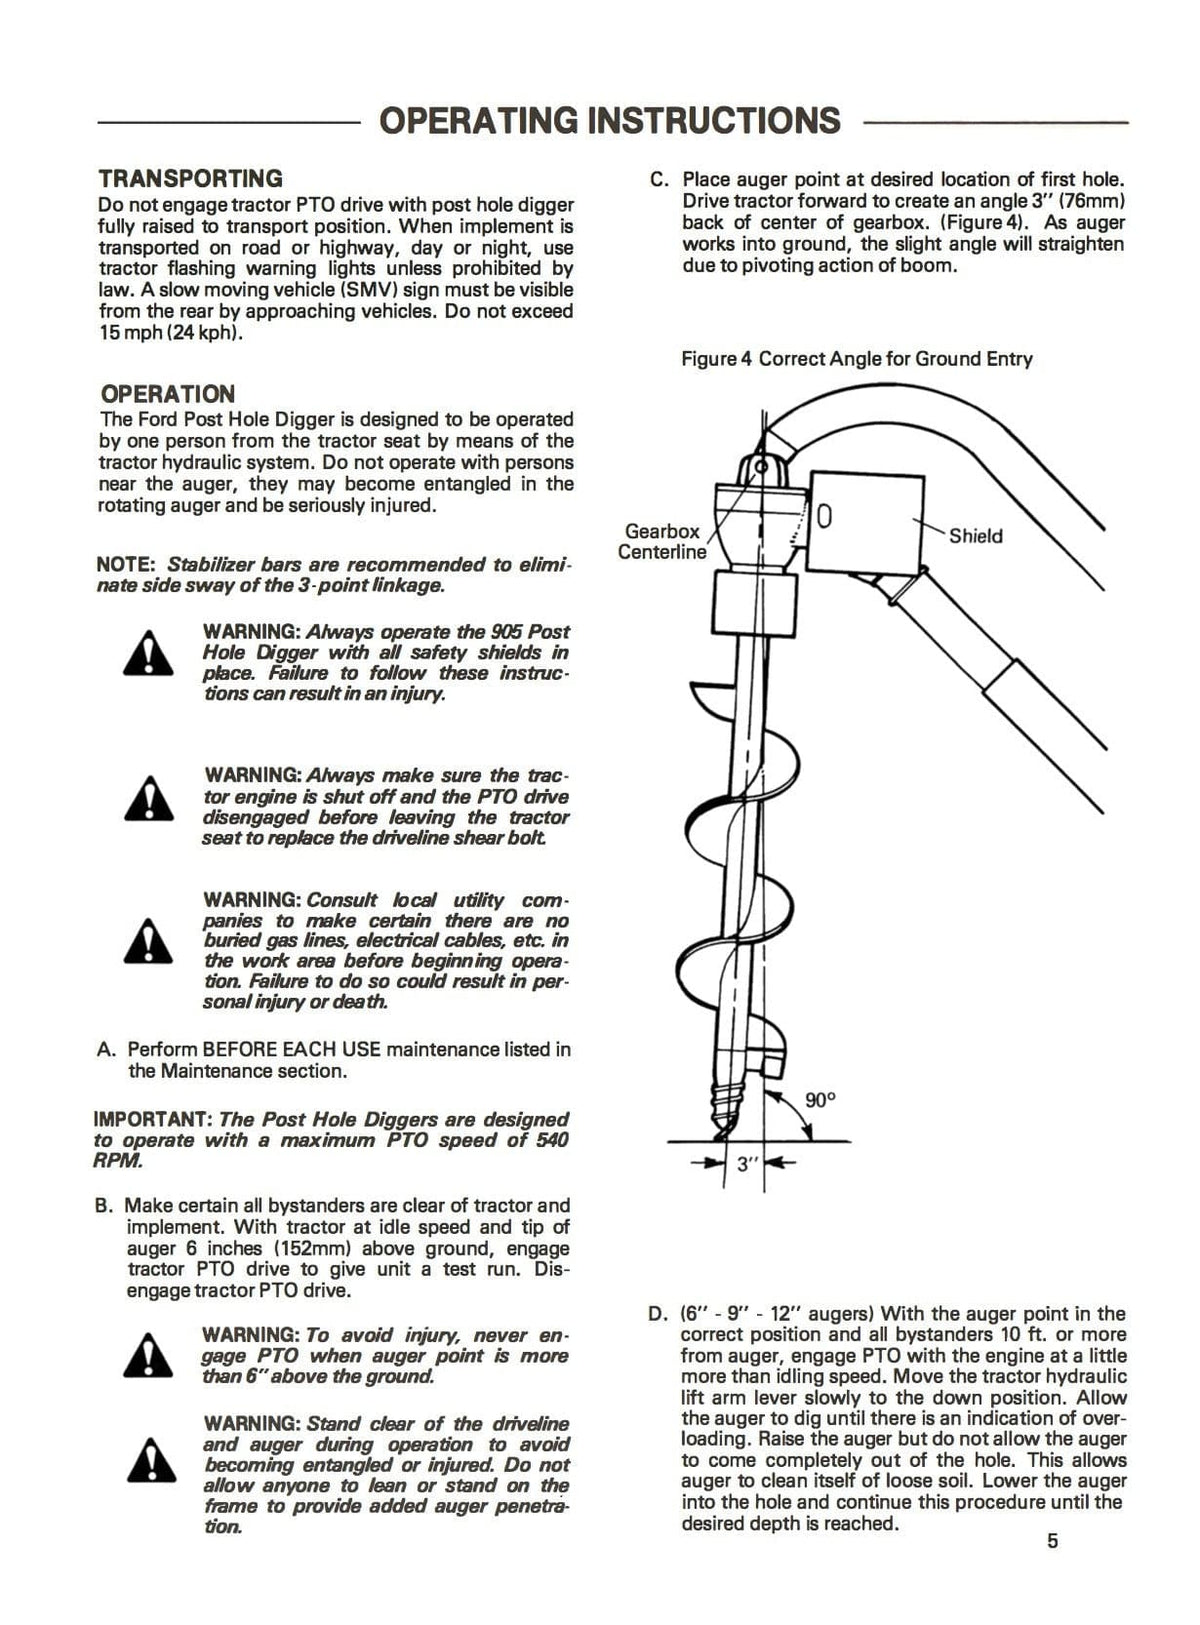 Ford Series 905 Light & Medium Duty Post Hole Digger - Operator's Manual - Ag Manuals - A Provider of Digital Farm Manuals - 3